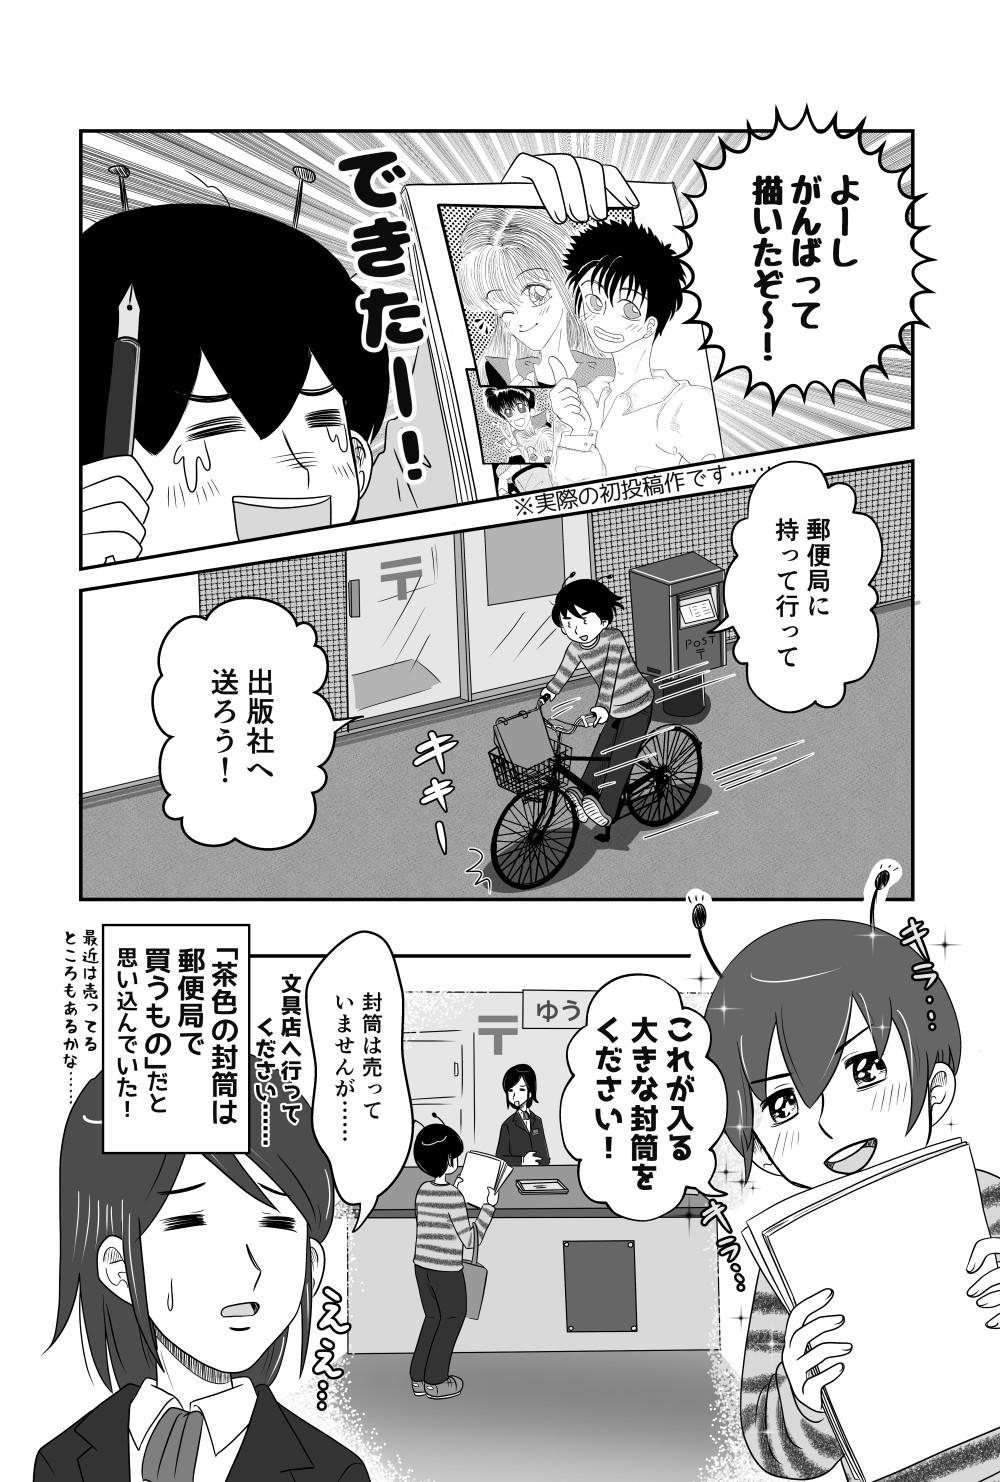 30_manga03_1000.jpg